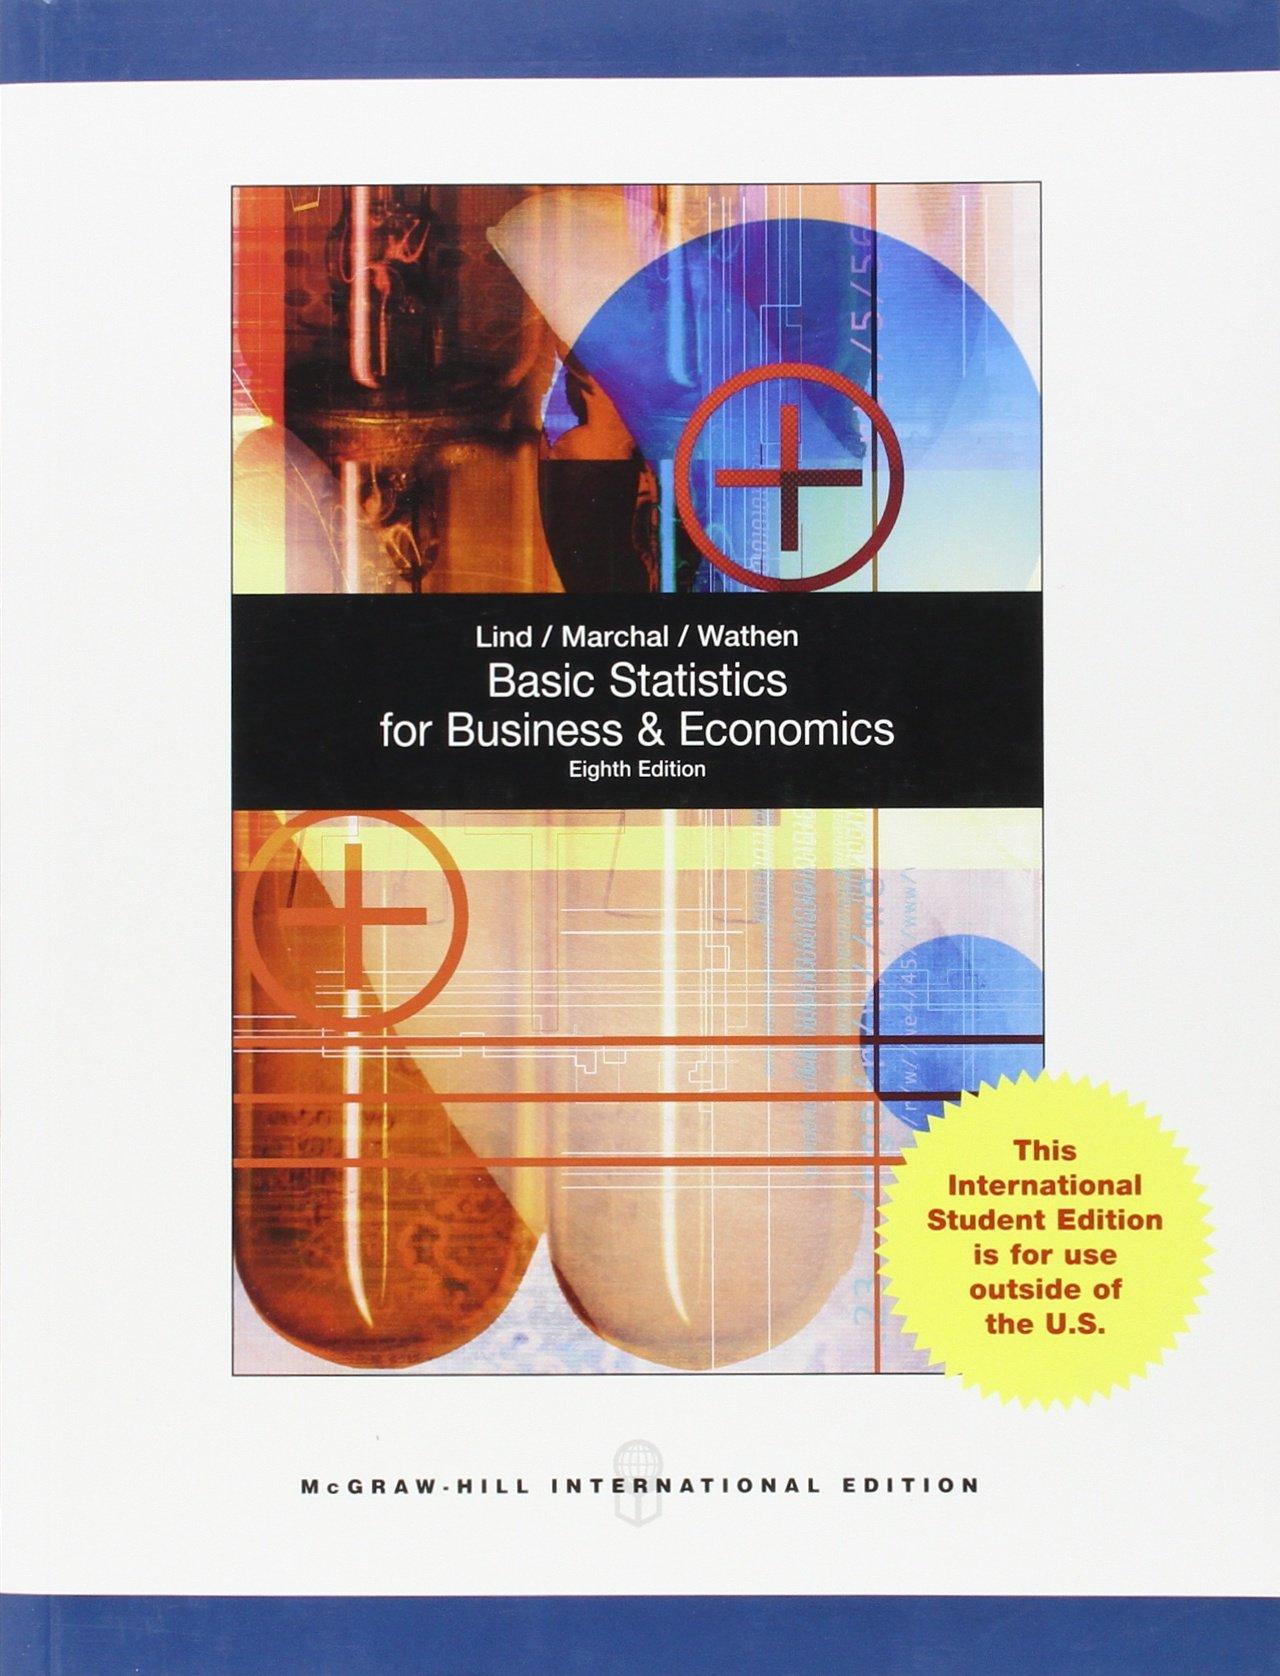 basic statistics for business and economics 8th international edition douglas lind, william marchal, samuel